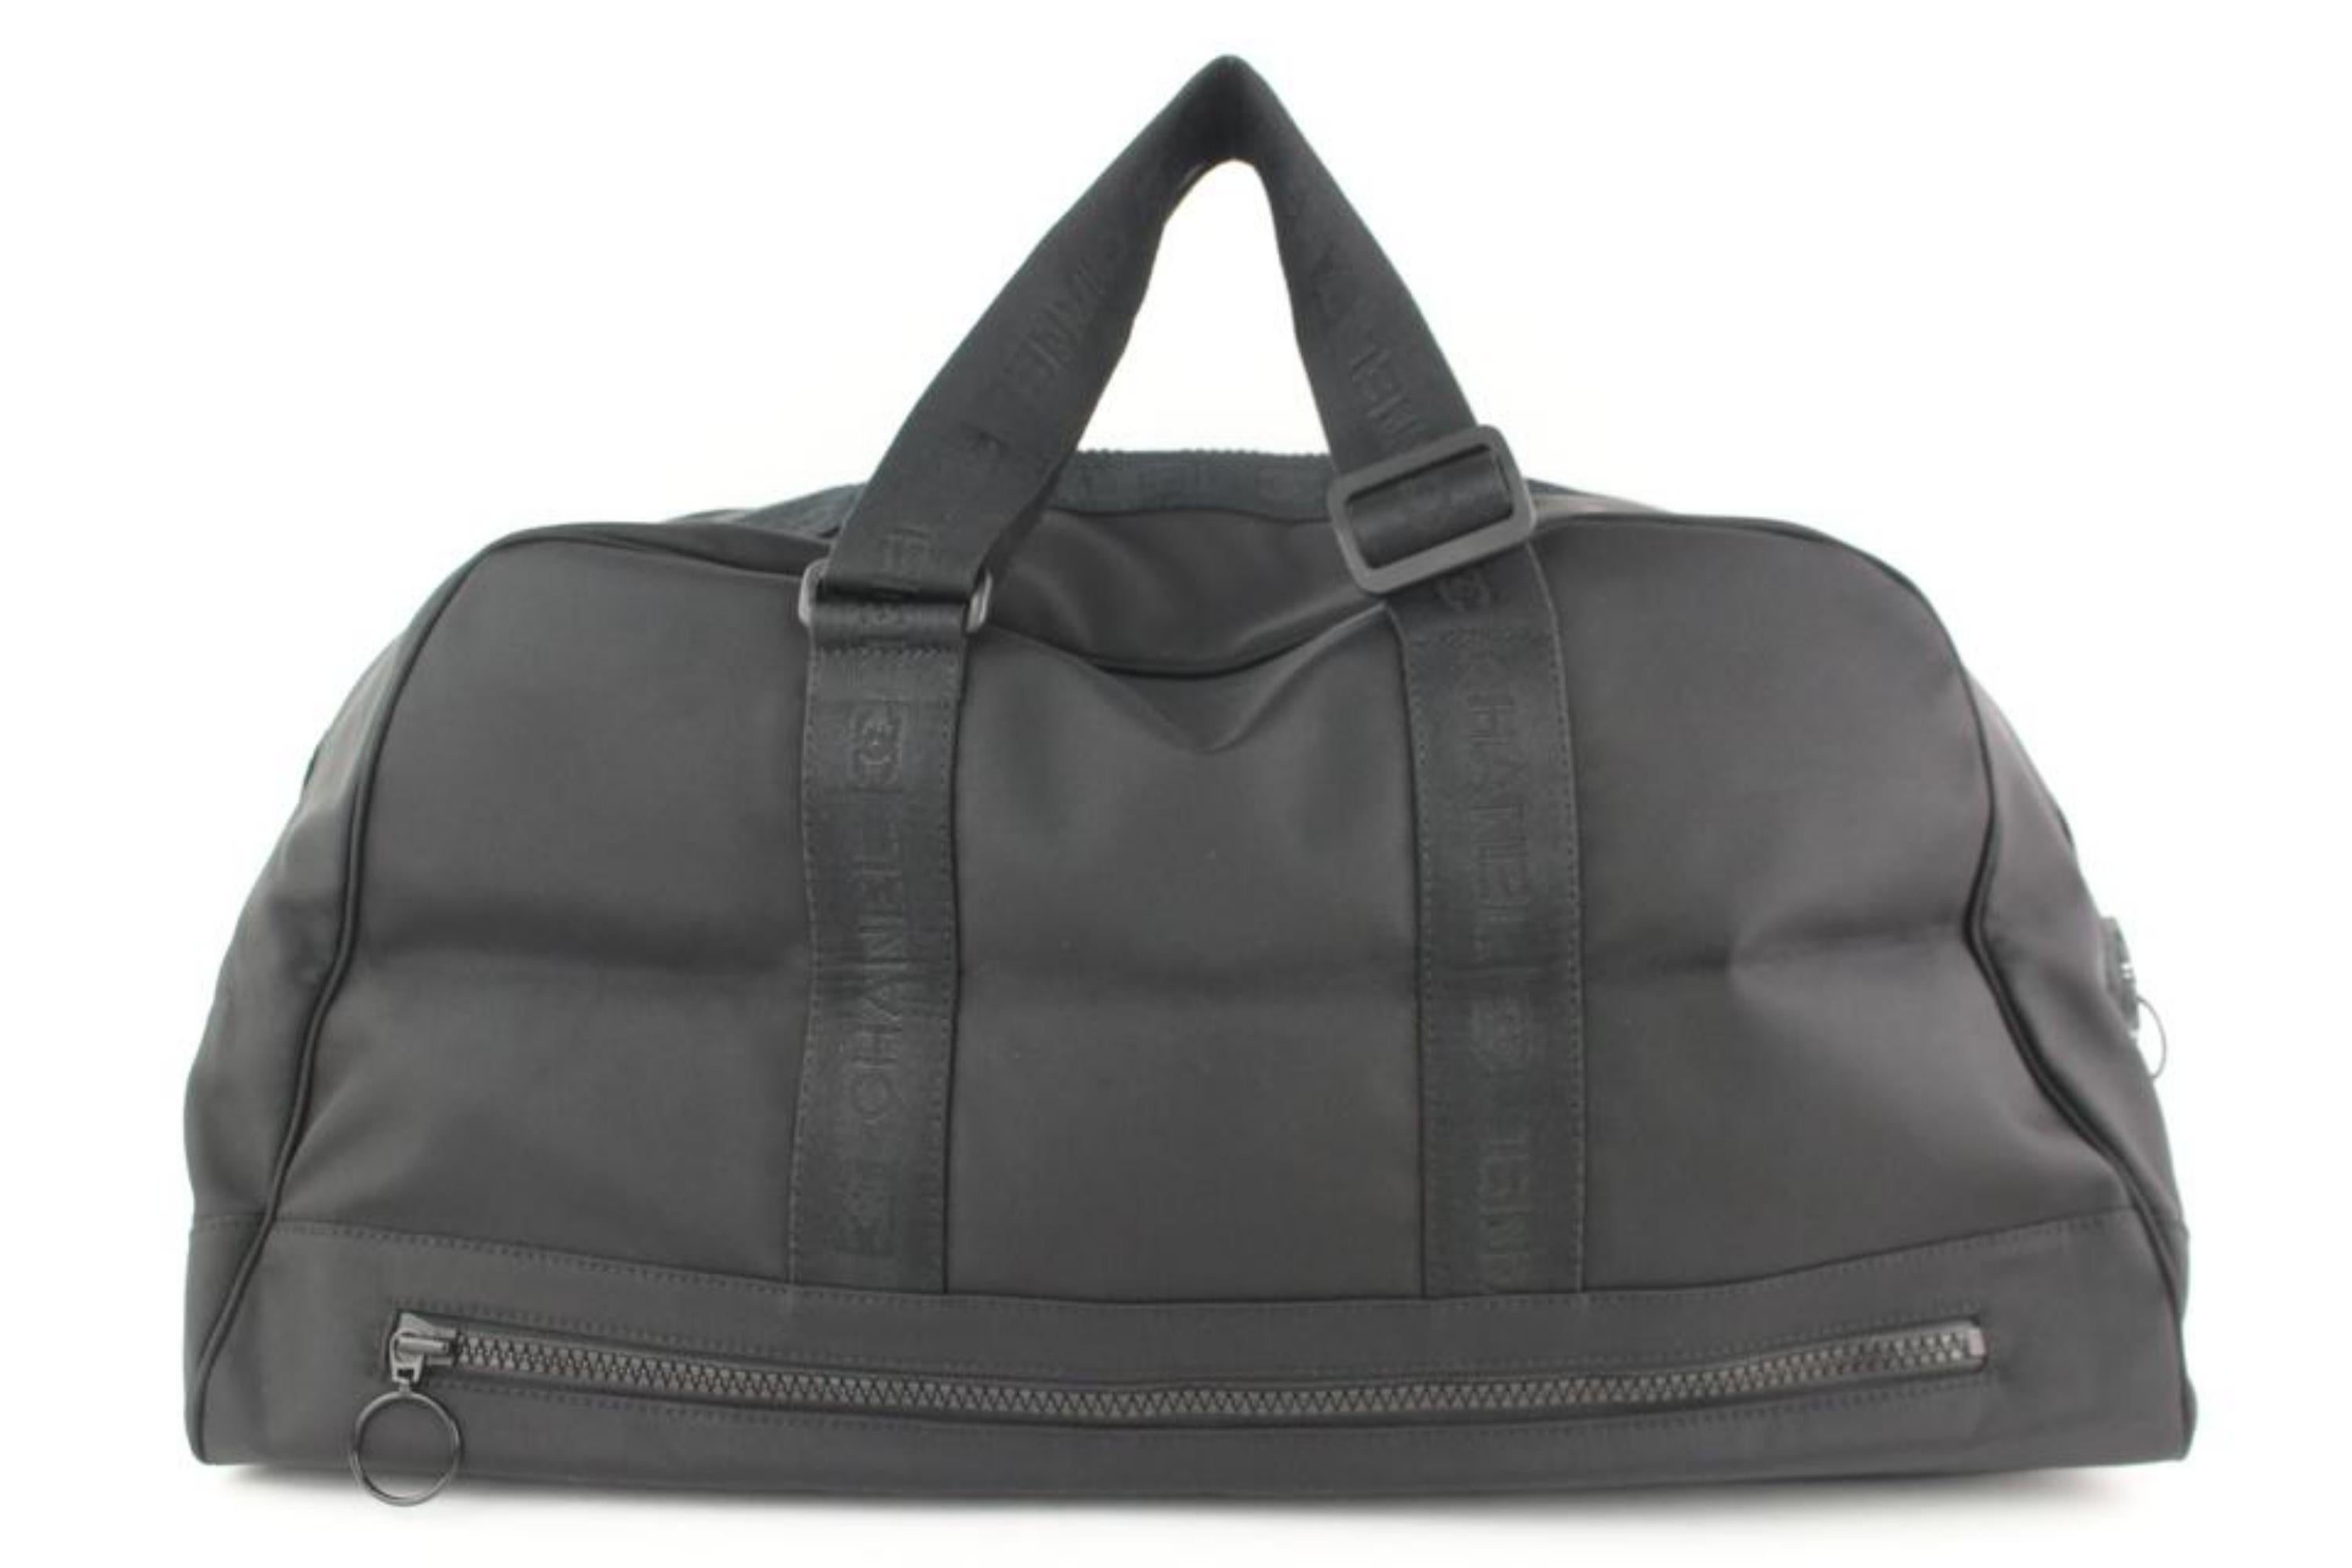 Chanel Duffle Cc Logo Sports Boston 19cz1106 Black Canvas Weekend/Travel Bag For Sale 1